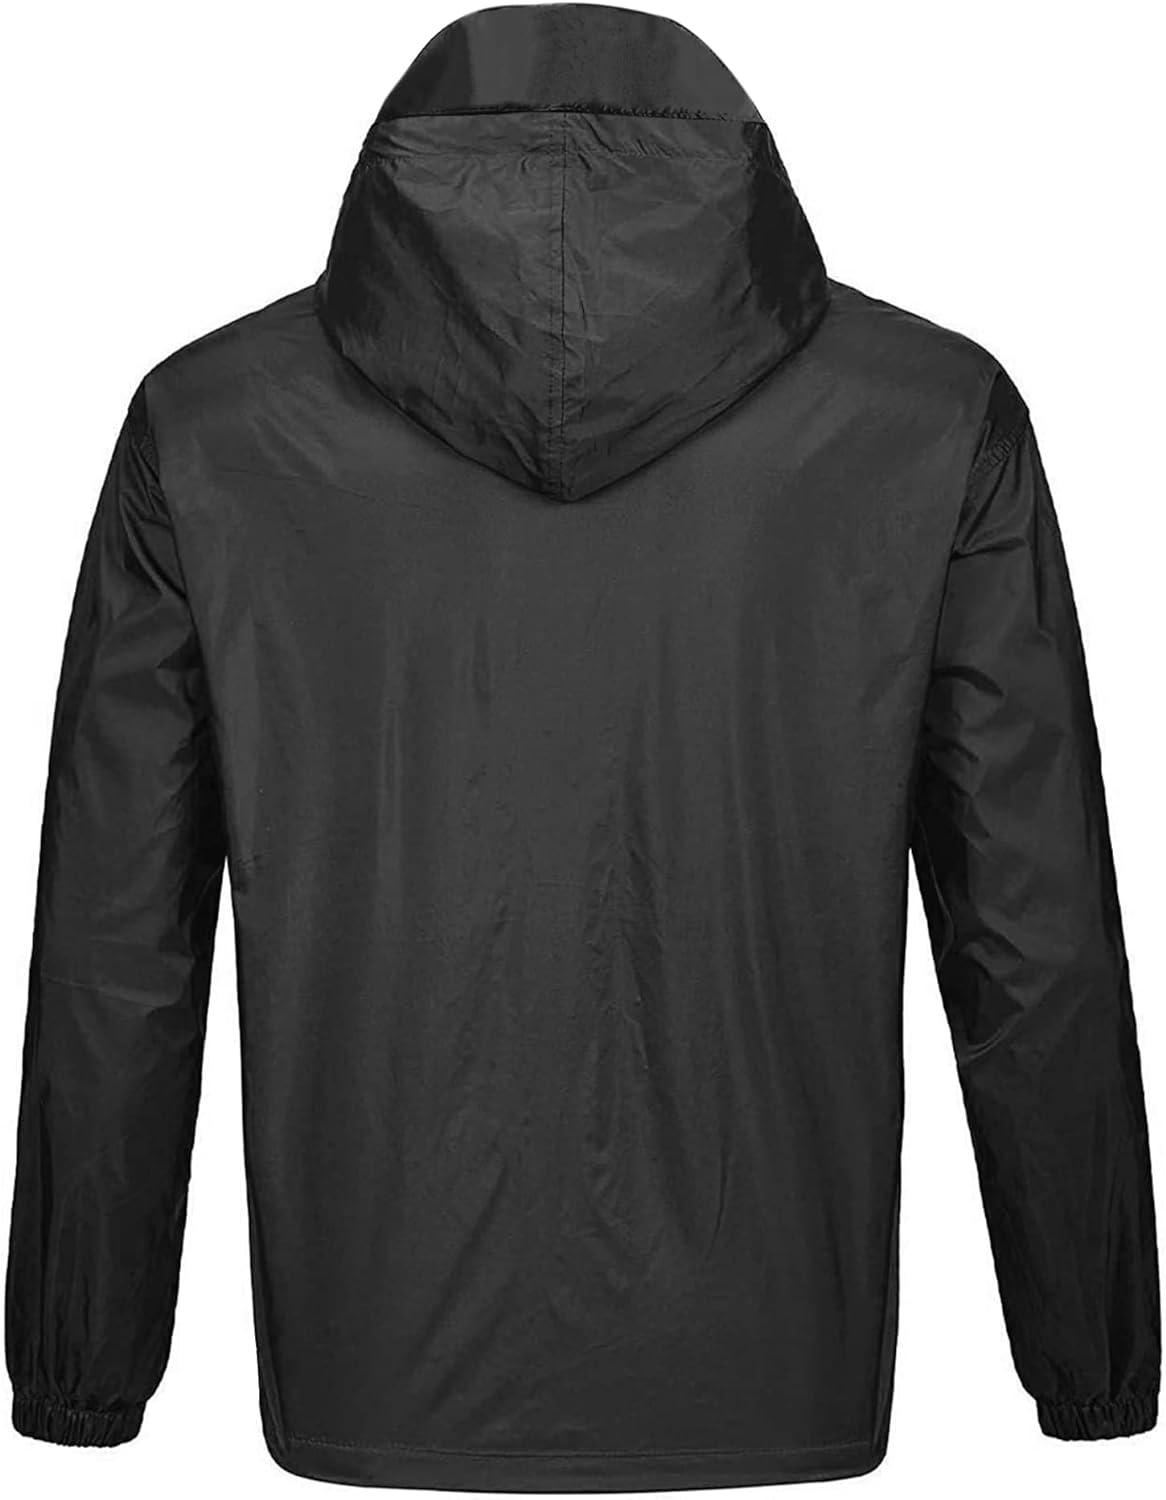 GEEK LIGHTING Men's Waterproof Hooded Rain Jacket Lightweight